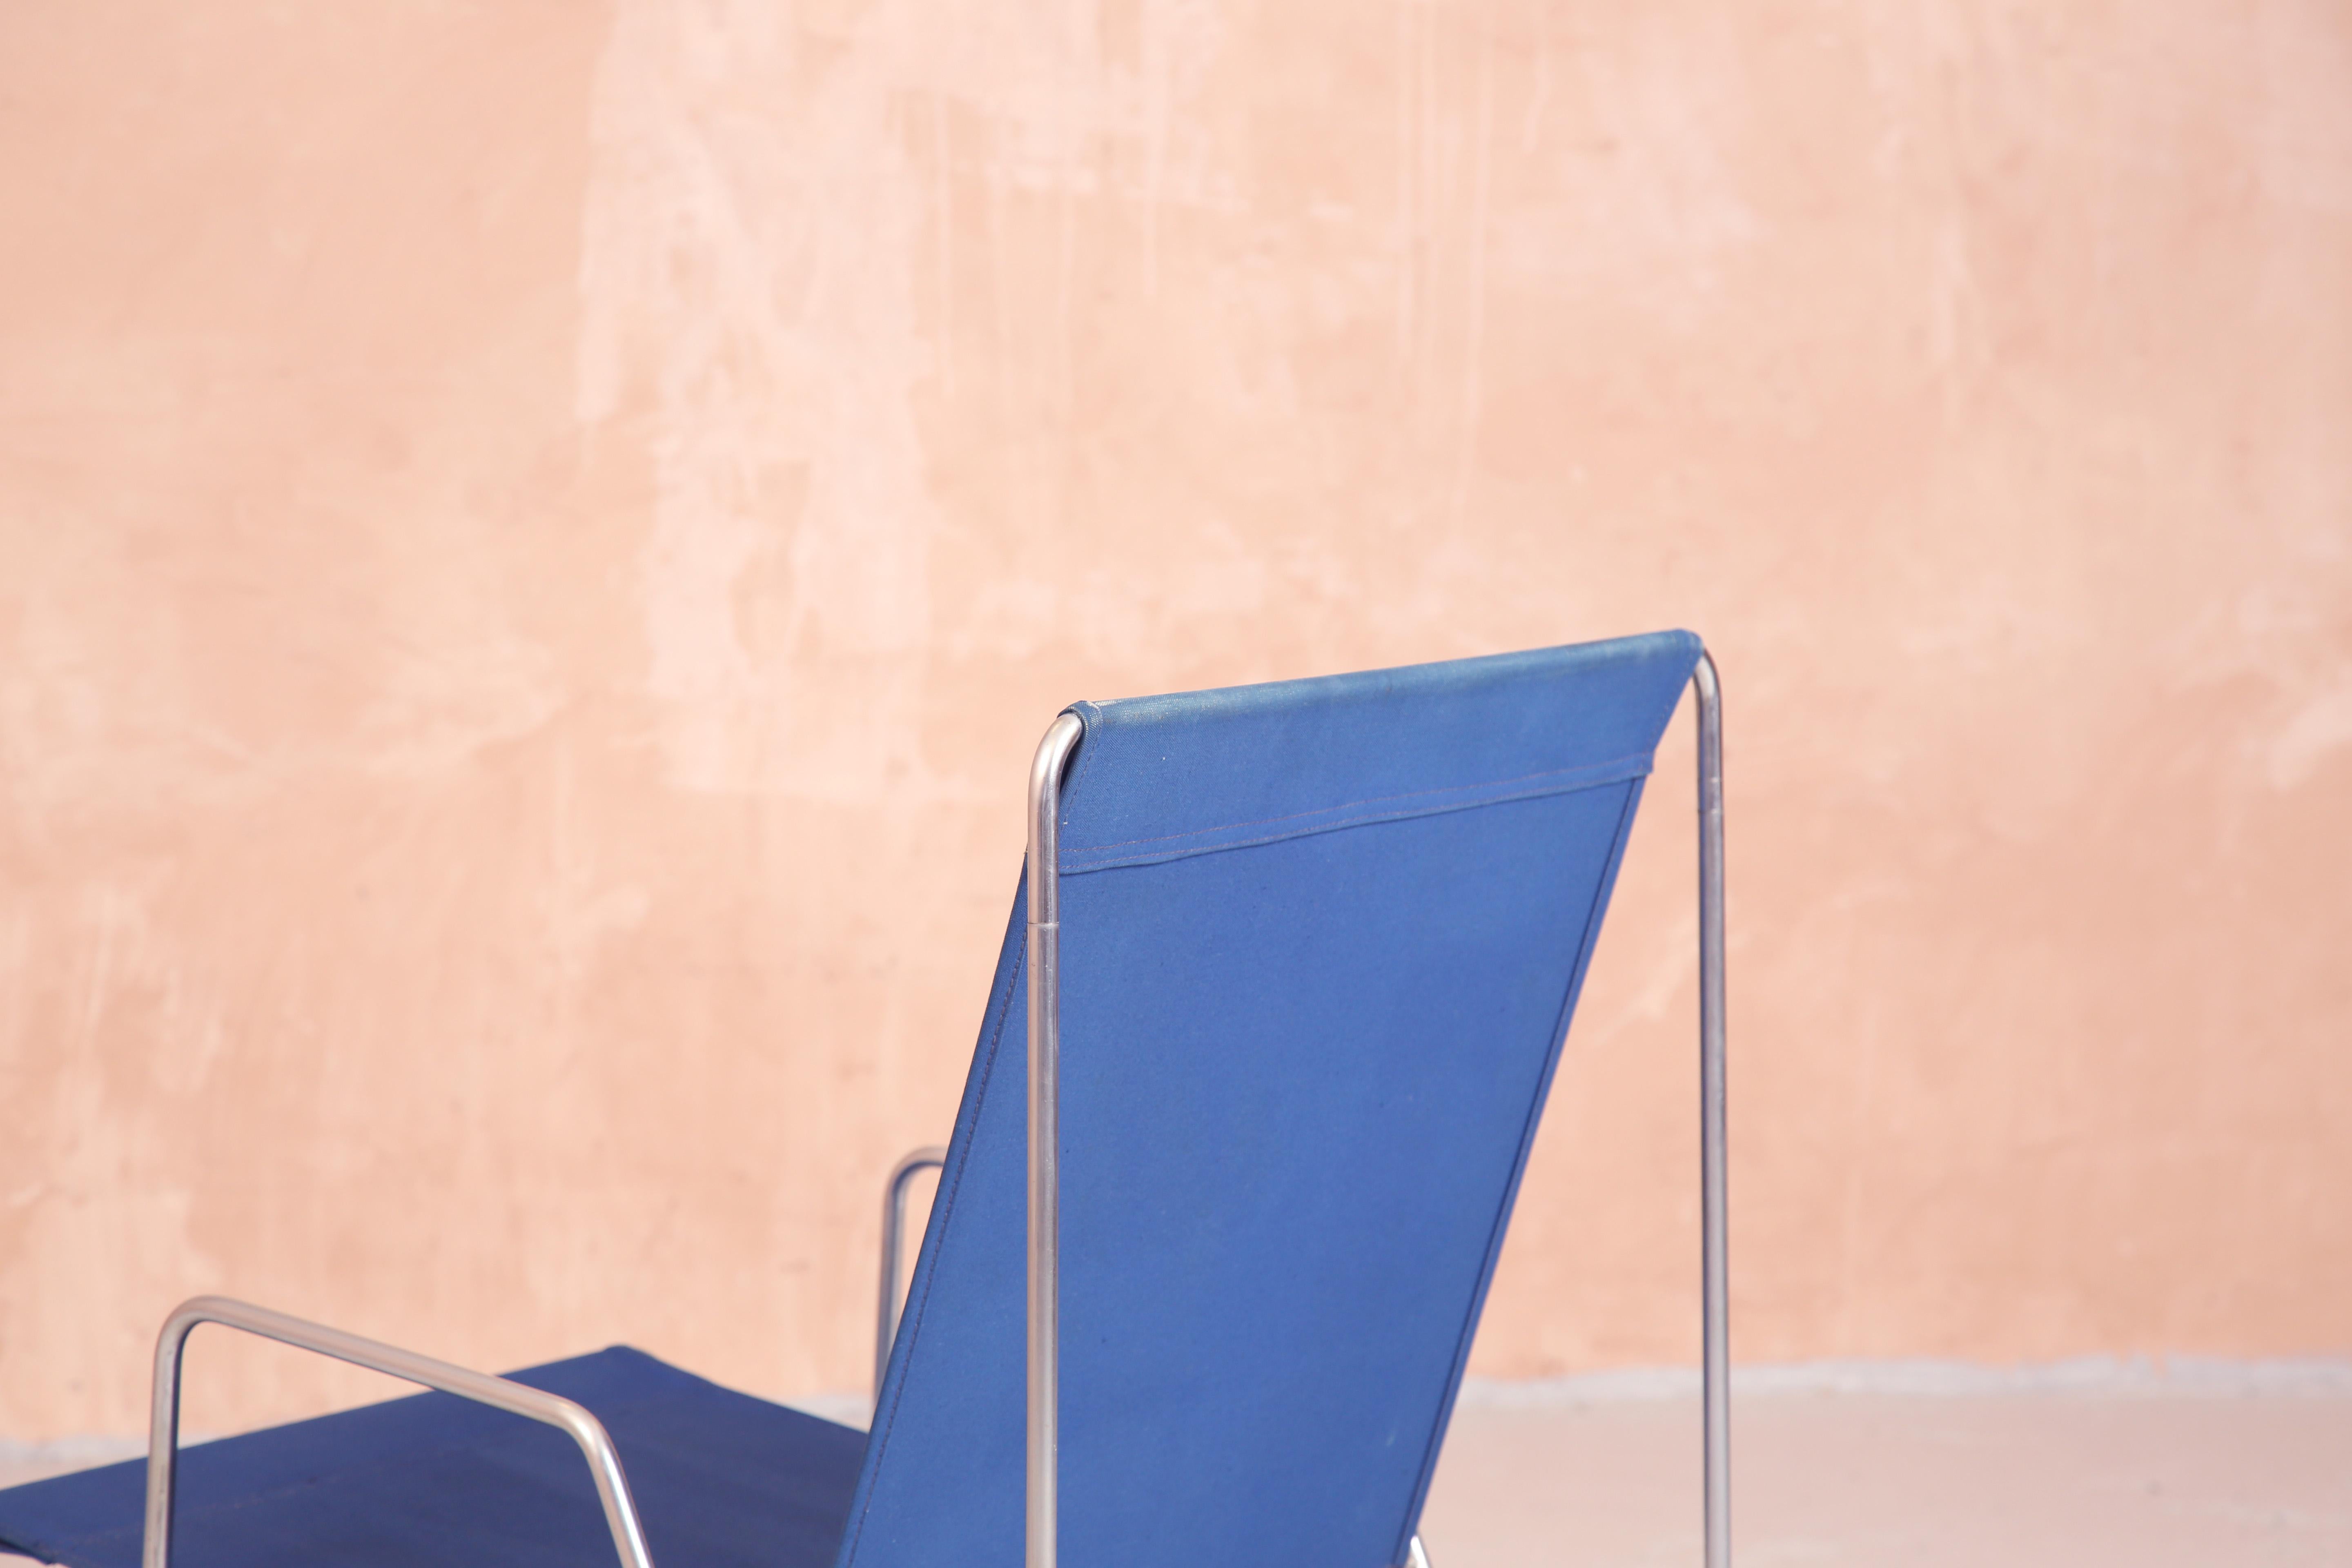 Verner Panton Bachelor Chair in Blue Sailcloth, Frtiz Hansen, 1955 For Sale 10